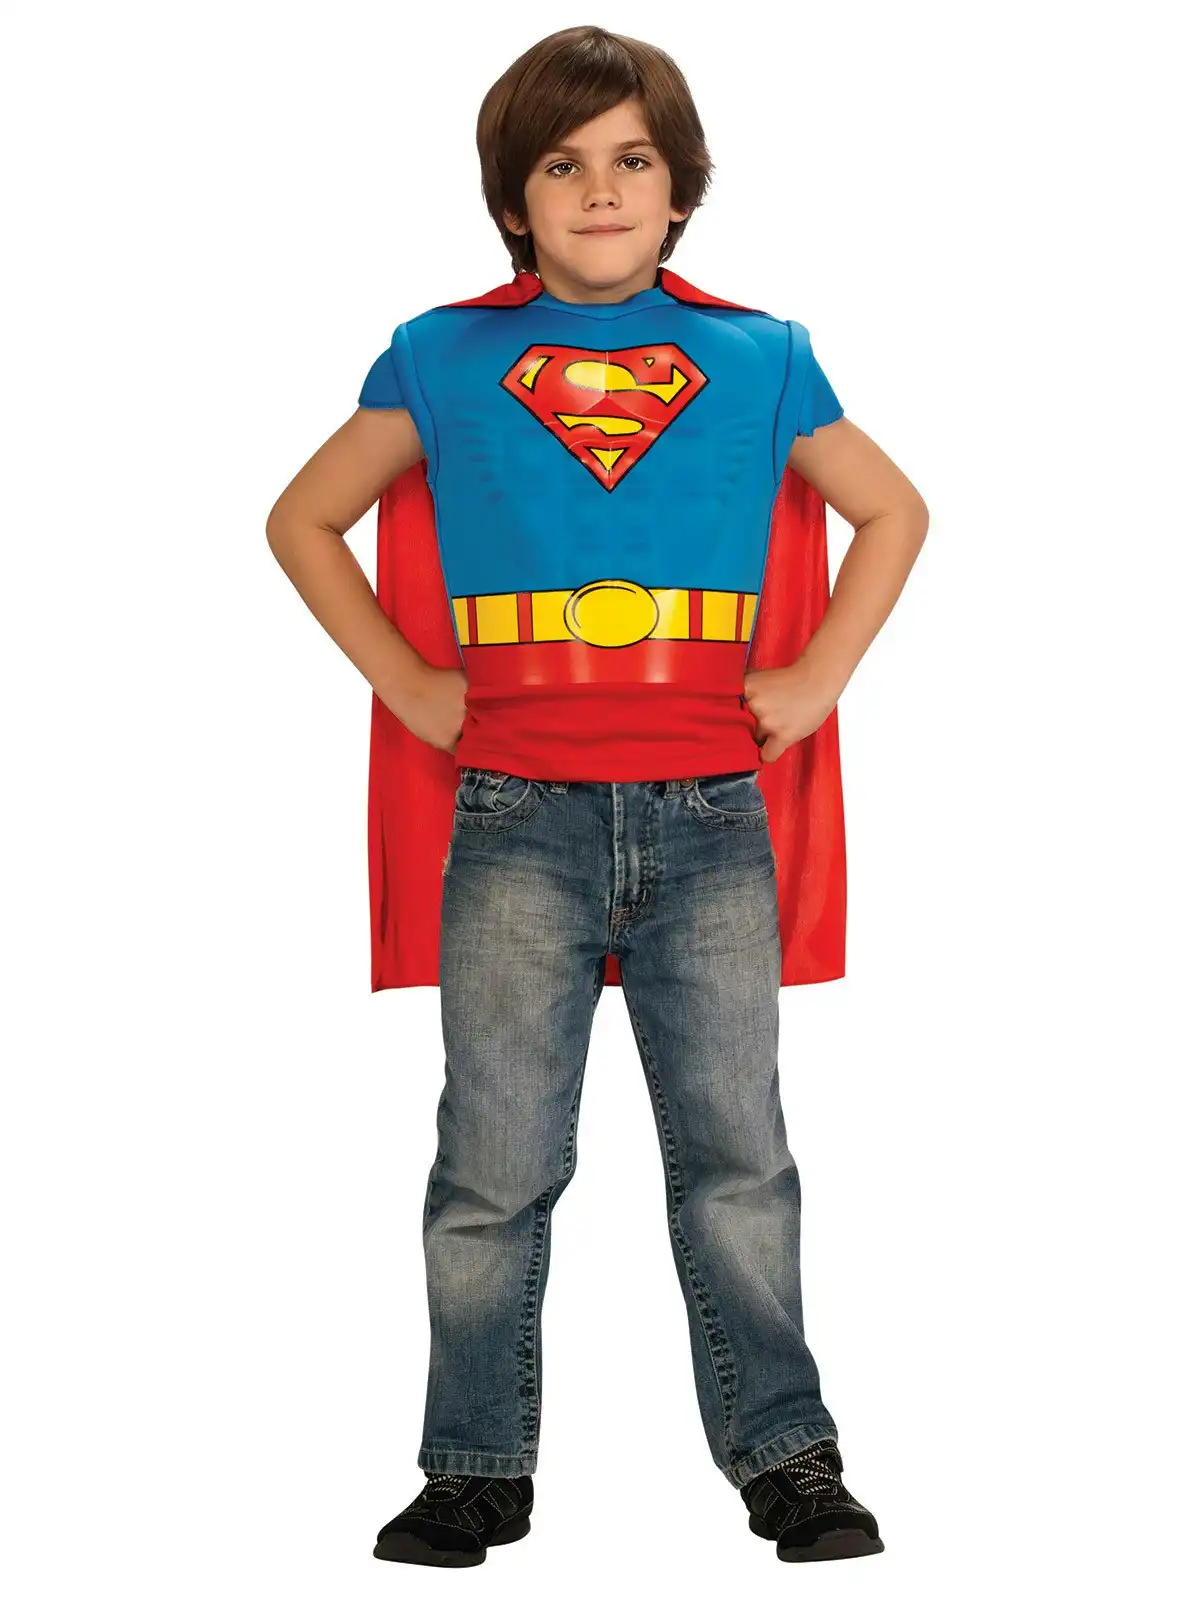 DC Comics Superman Eva Dress Up Party Costume Top Kids/Boys/Children Size 3-6